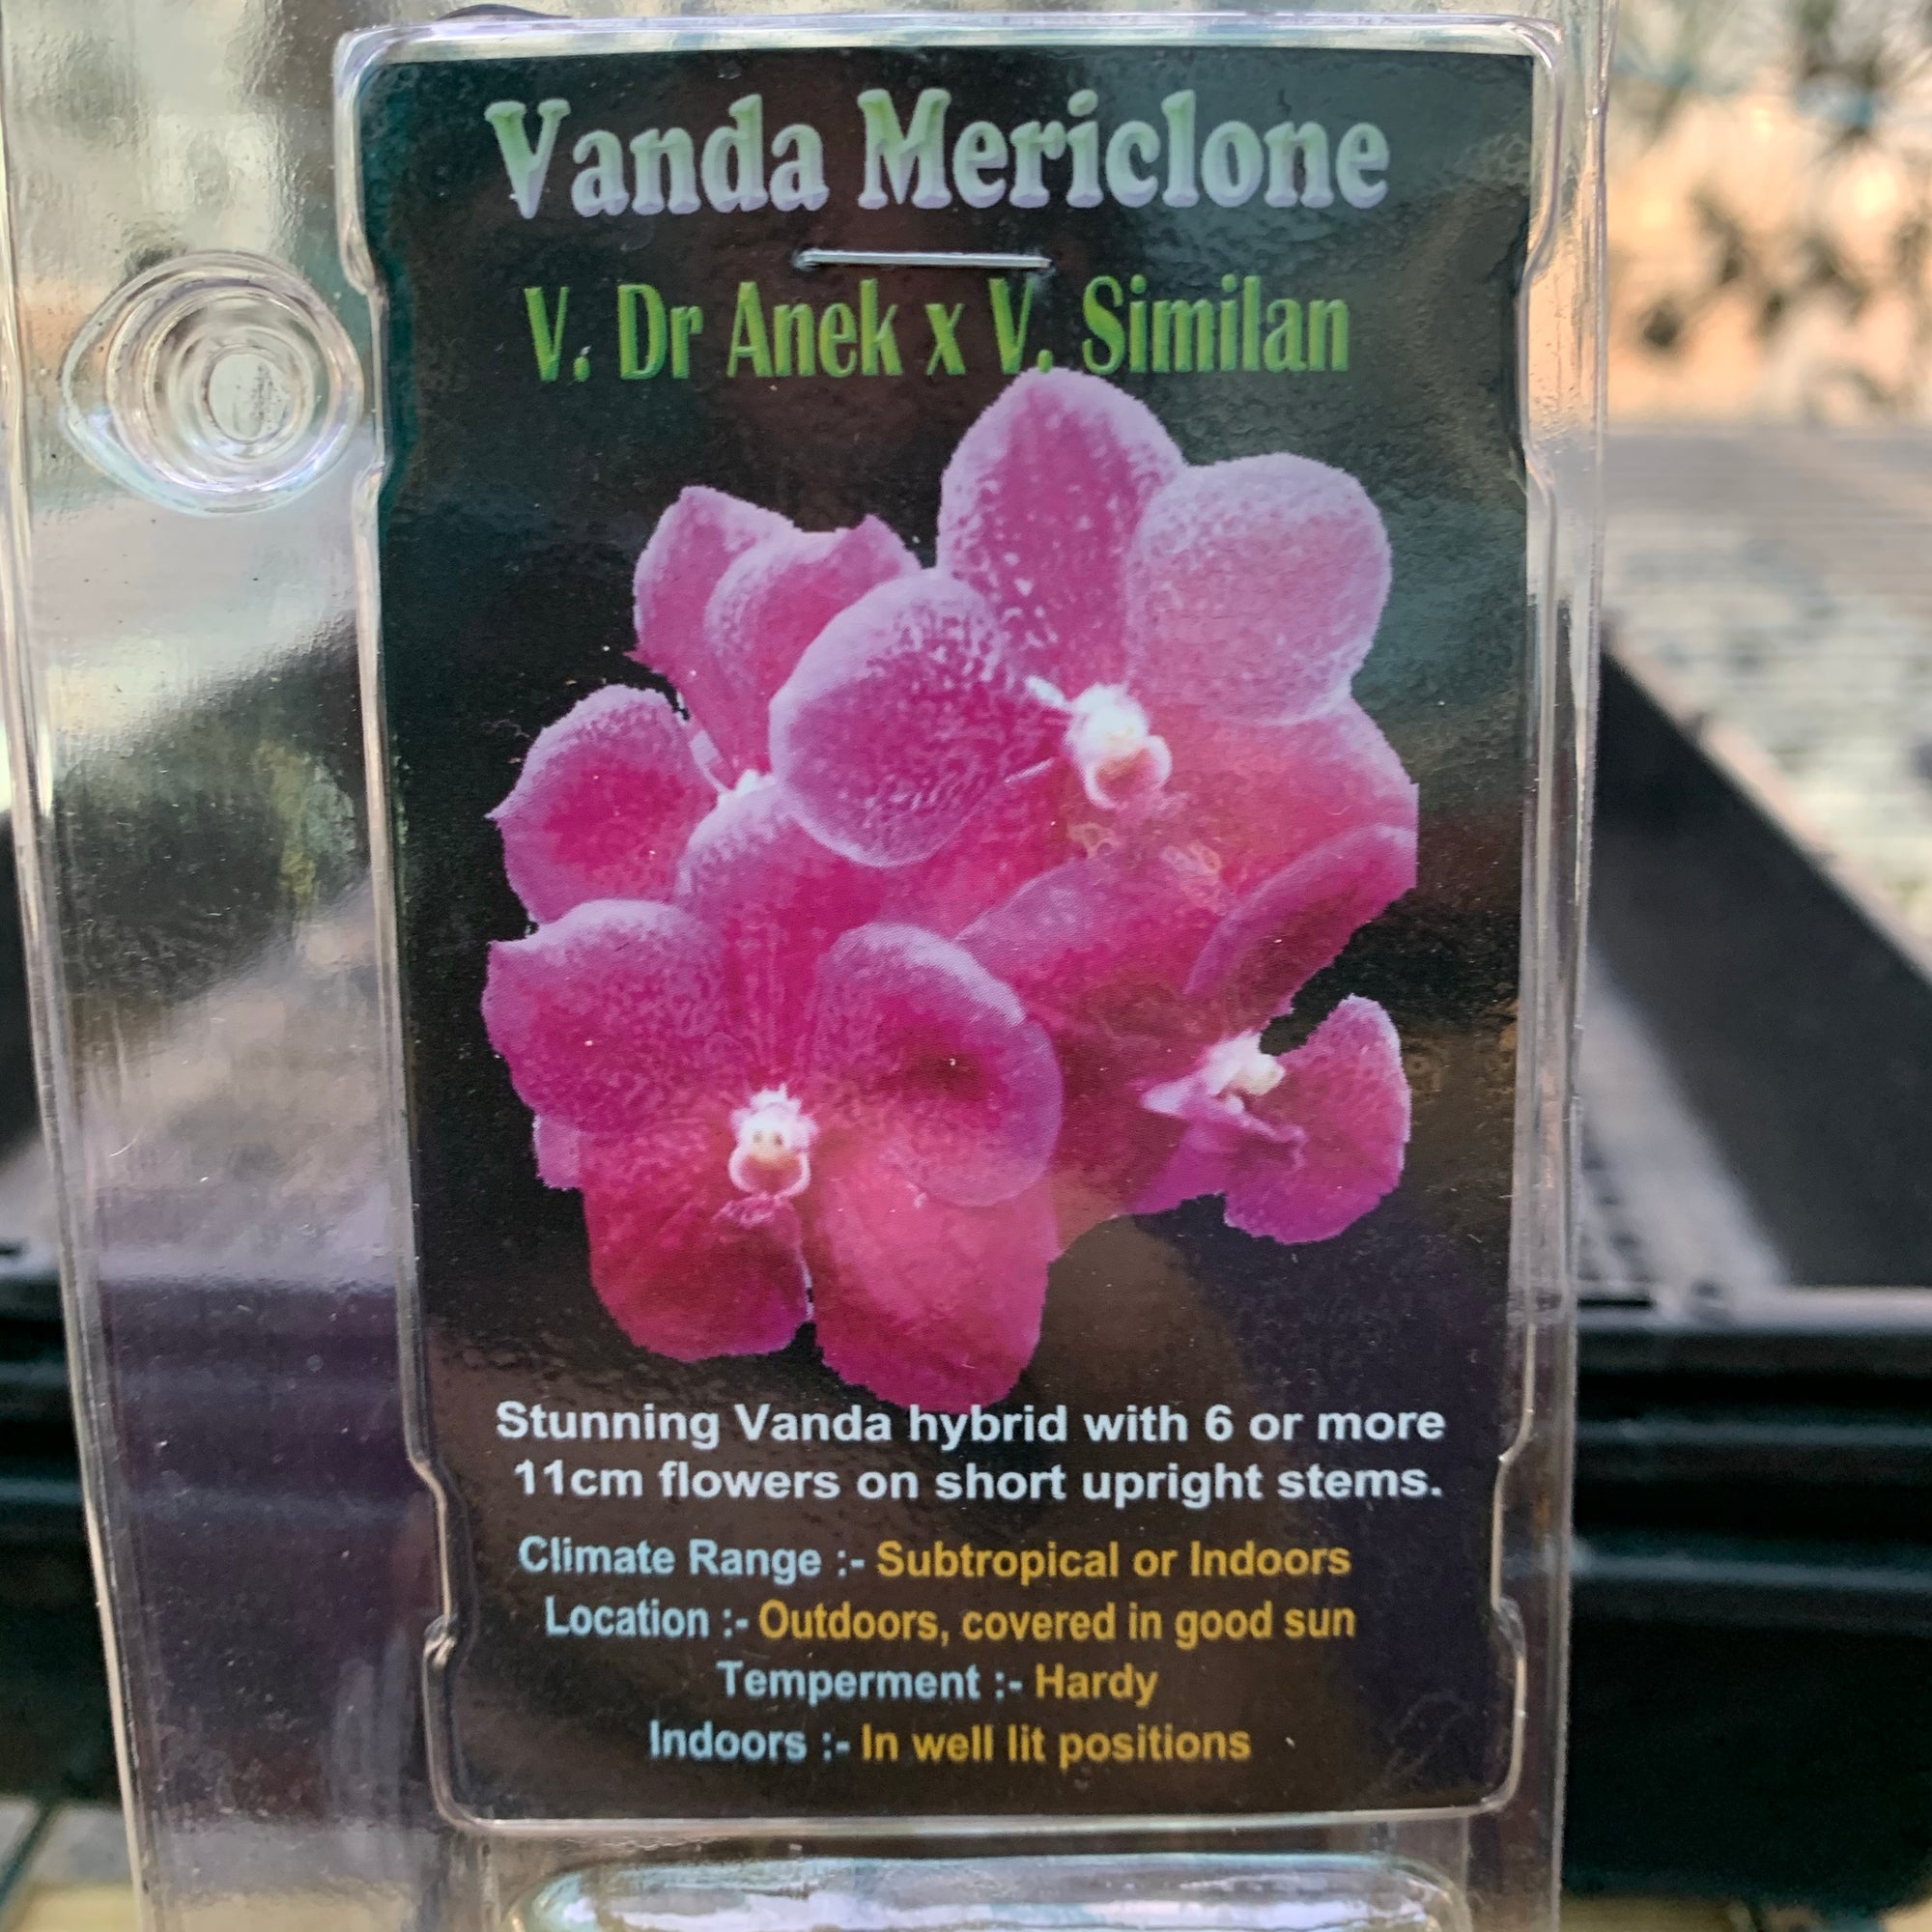 Orchid - Vanda Mericlone ‘V. Dr Anek X V. Similan’